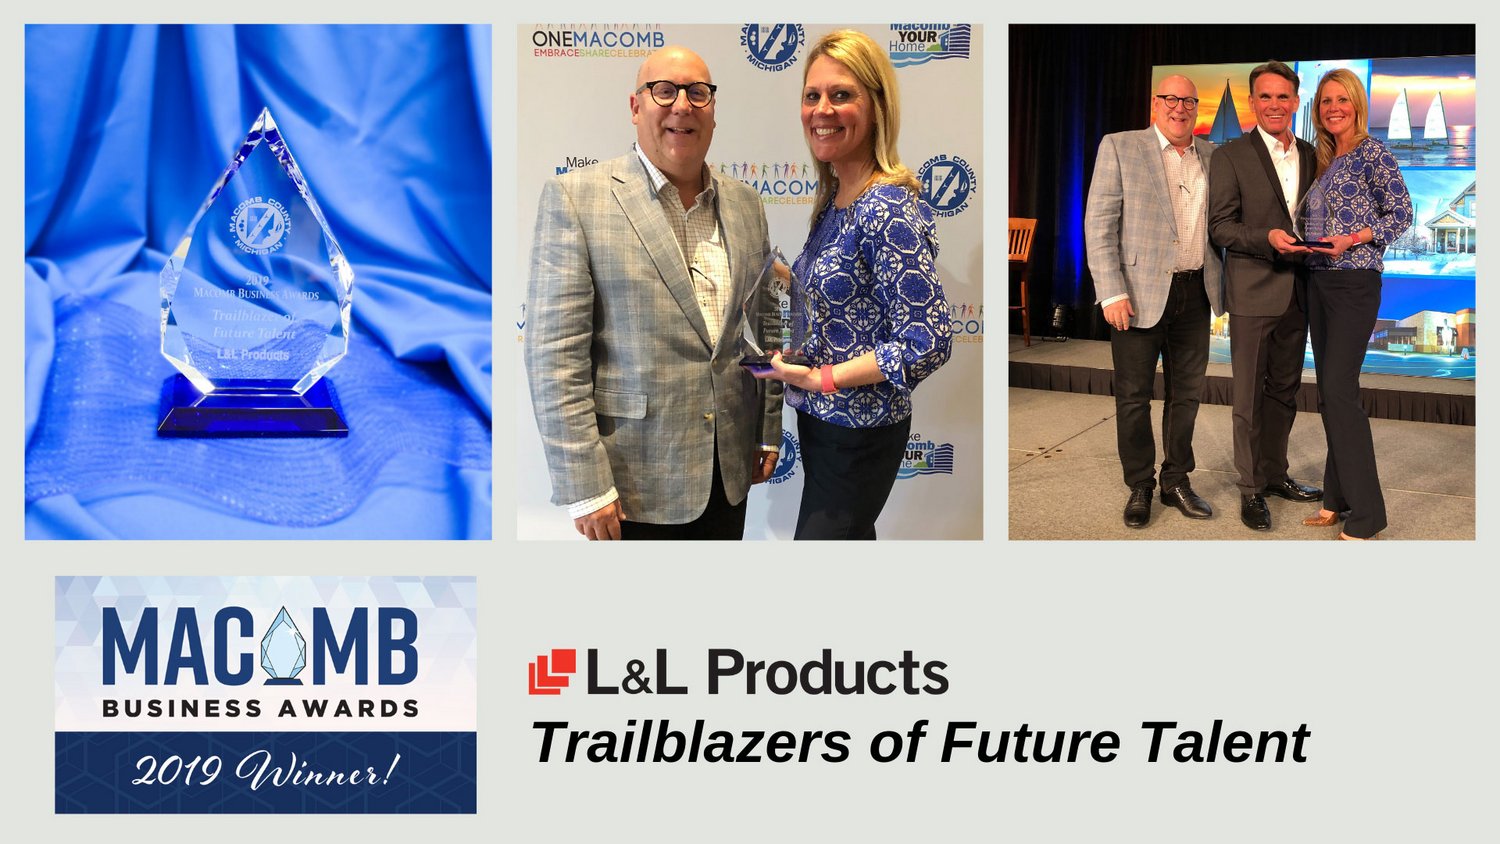 L&L Products Awarded Macomb Business Award for Trailblazers of Future Talent